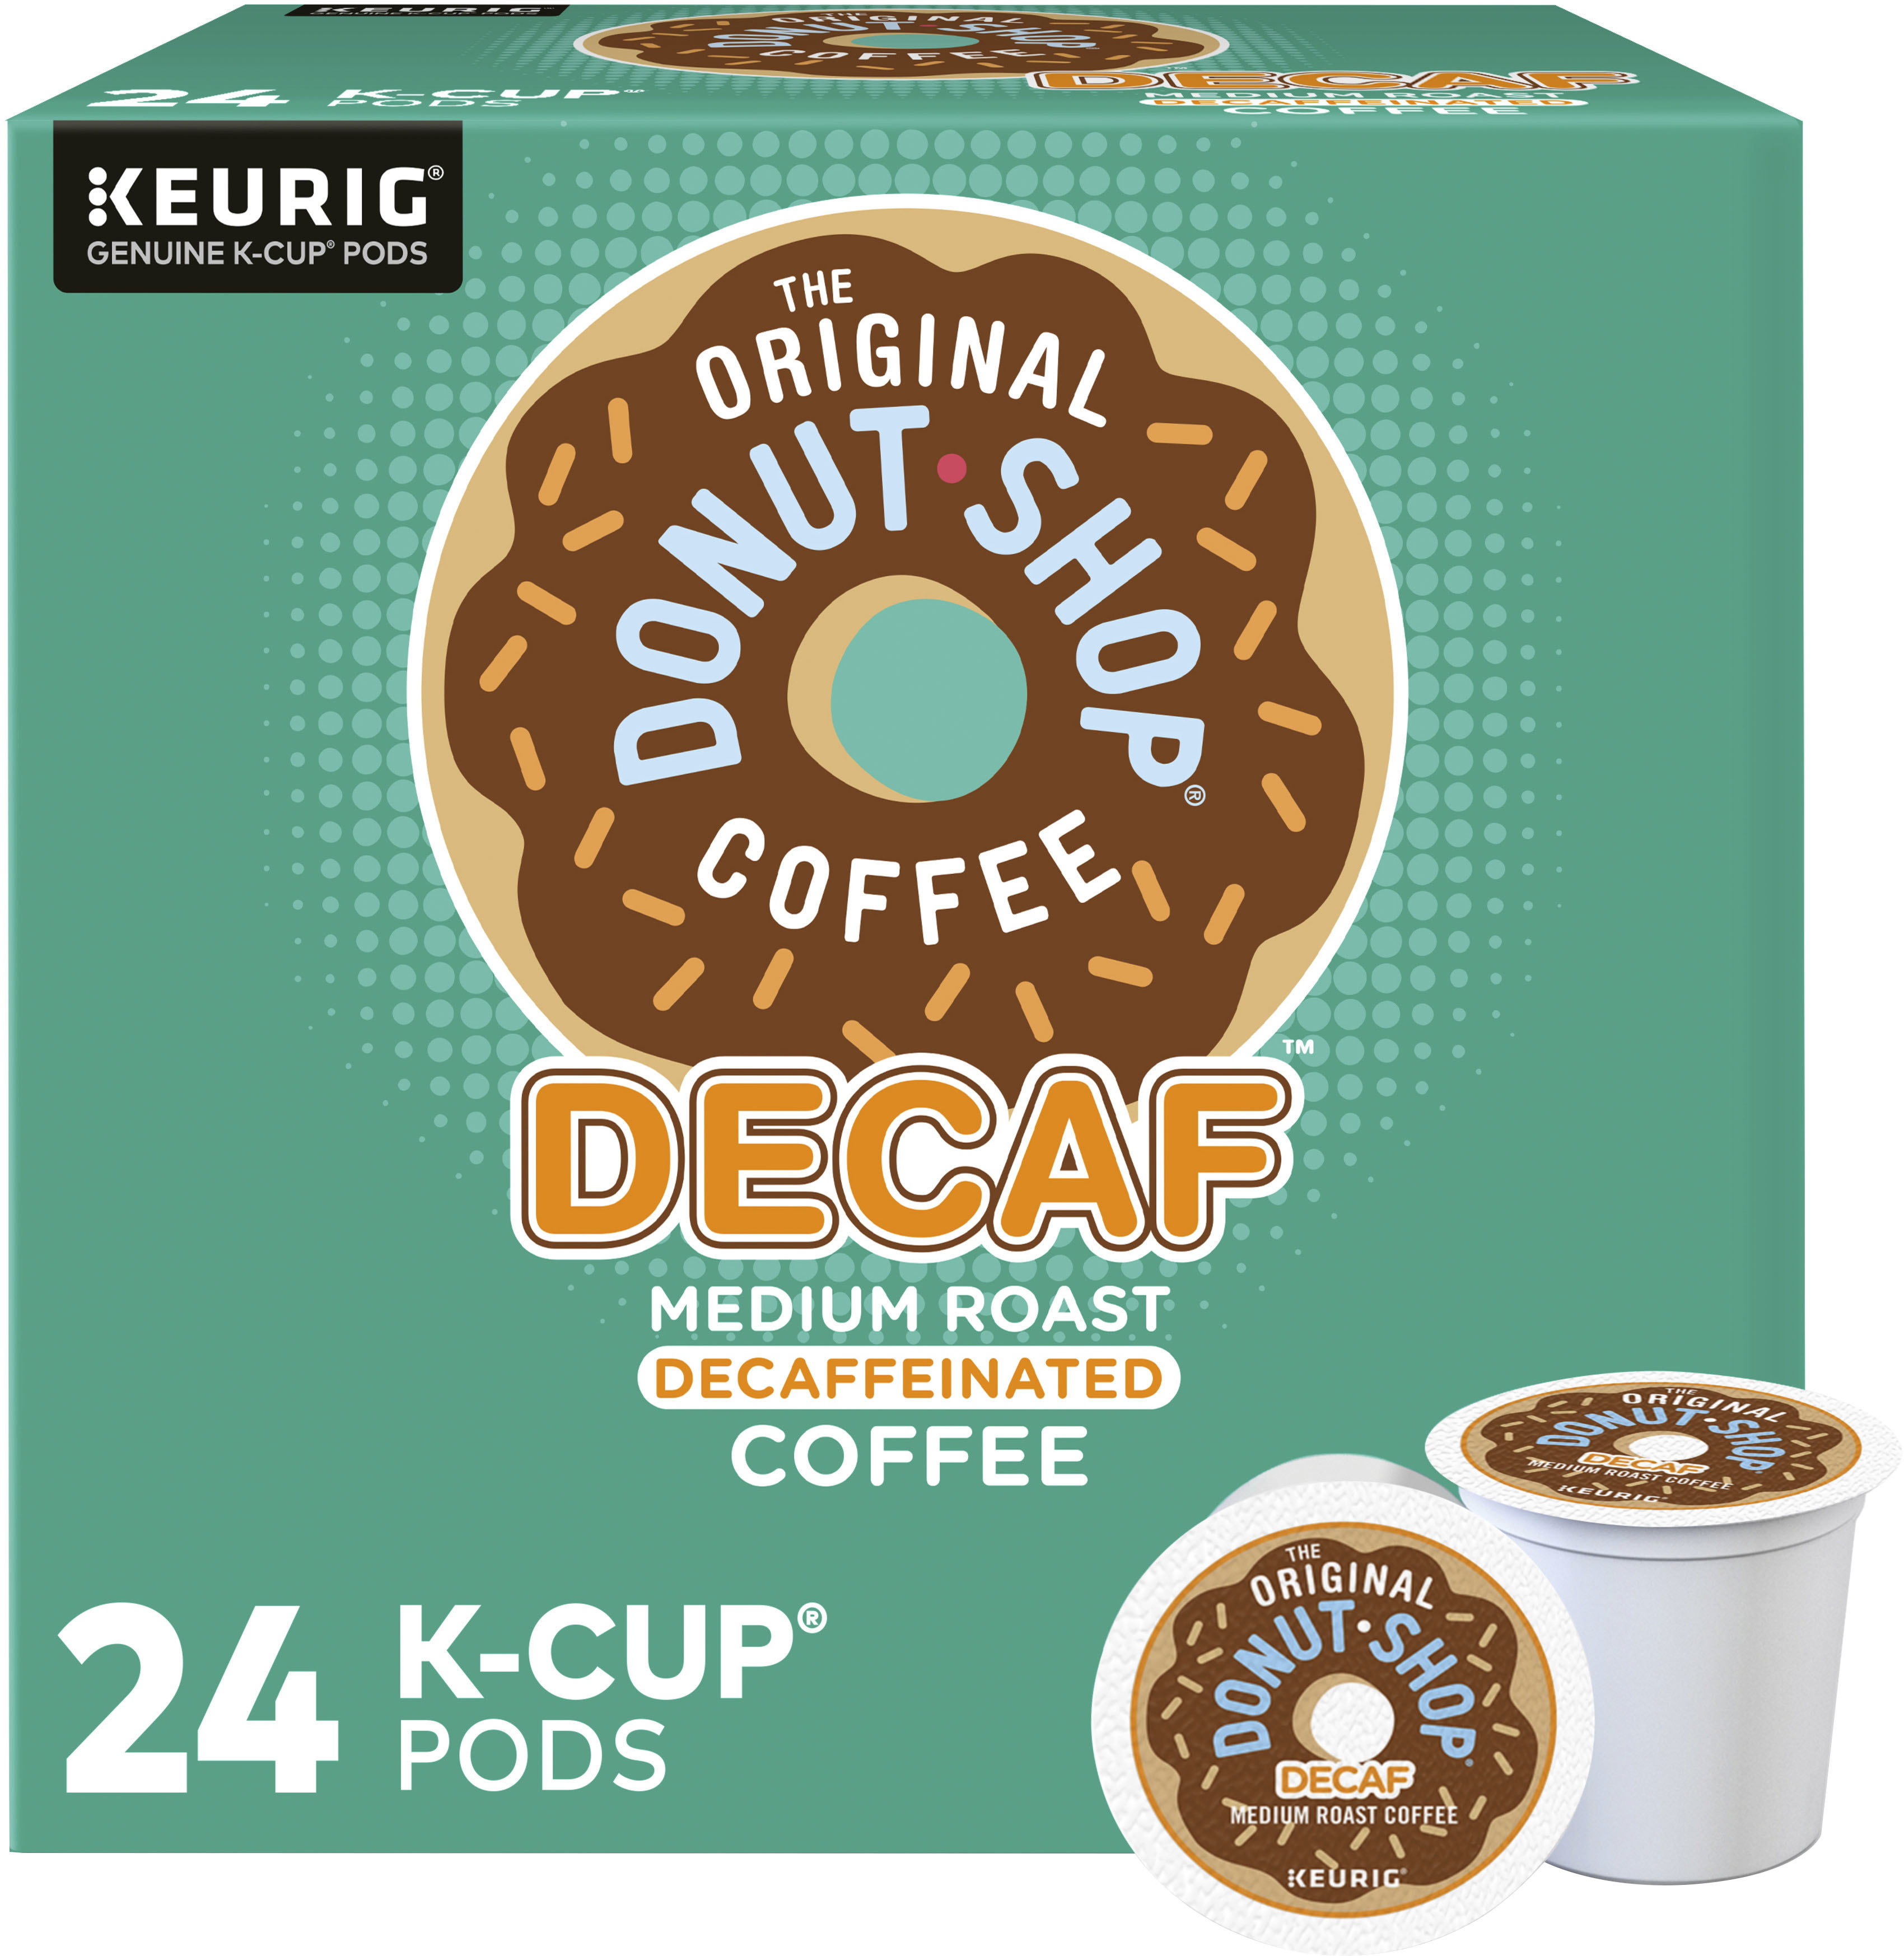 The Original Donut Shop - Decaf Keurig Single-Serve K-Cup Pods, Medium Roast Coffee, 24 Count